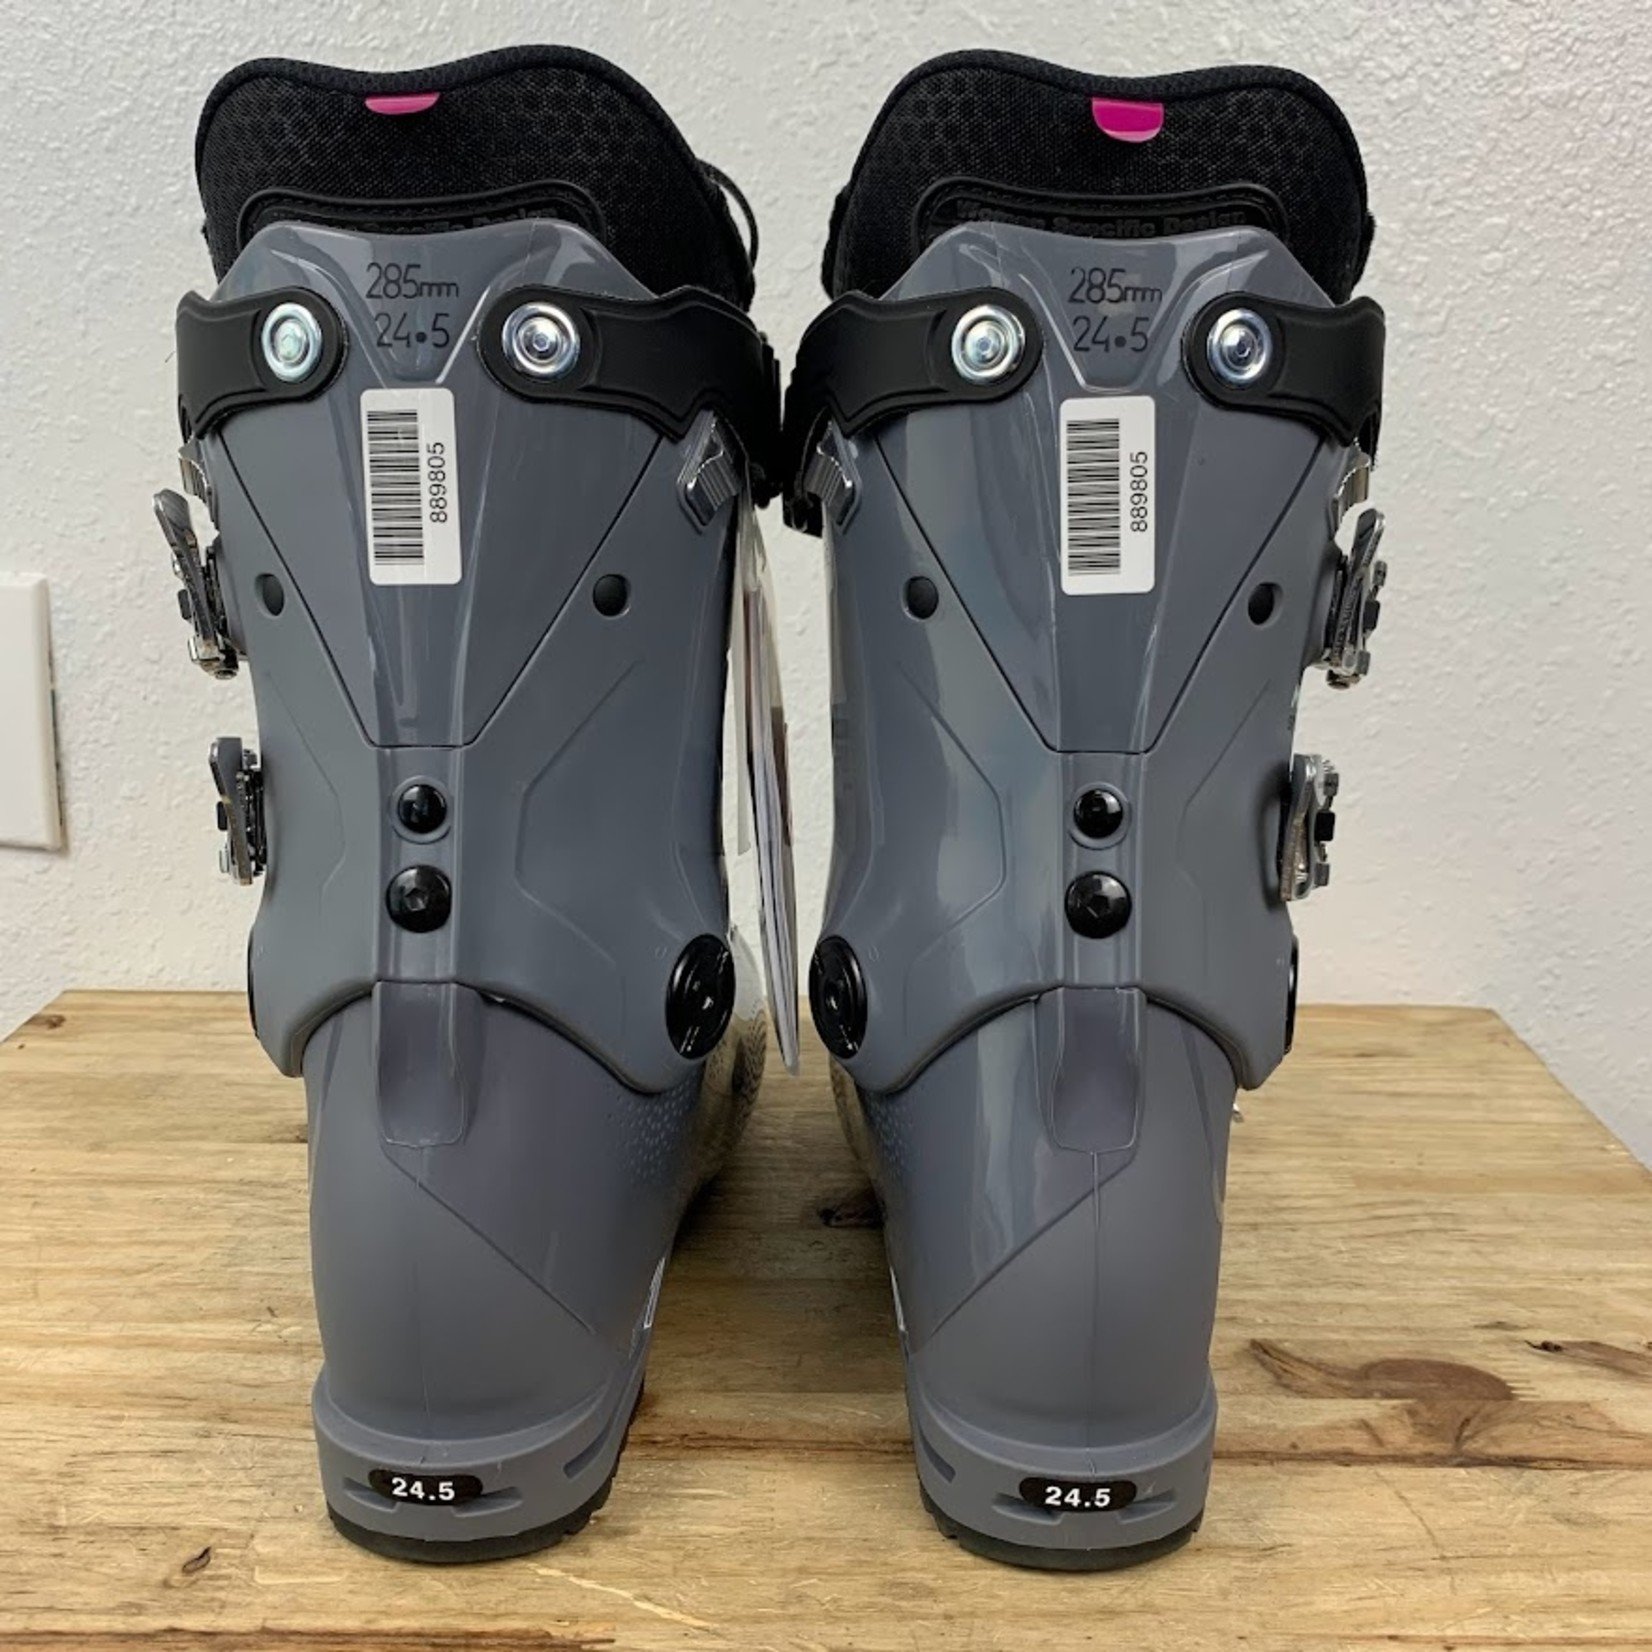 Tecnica NEW 2022 Tecnica Mach Sport 75 W Ski Boots, Size 25.5